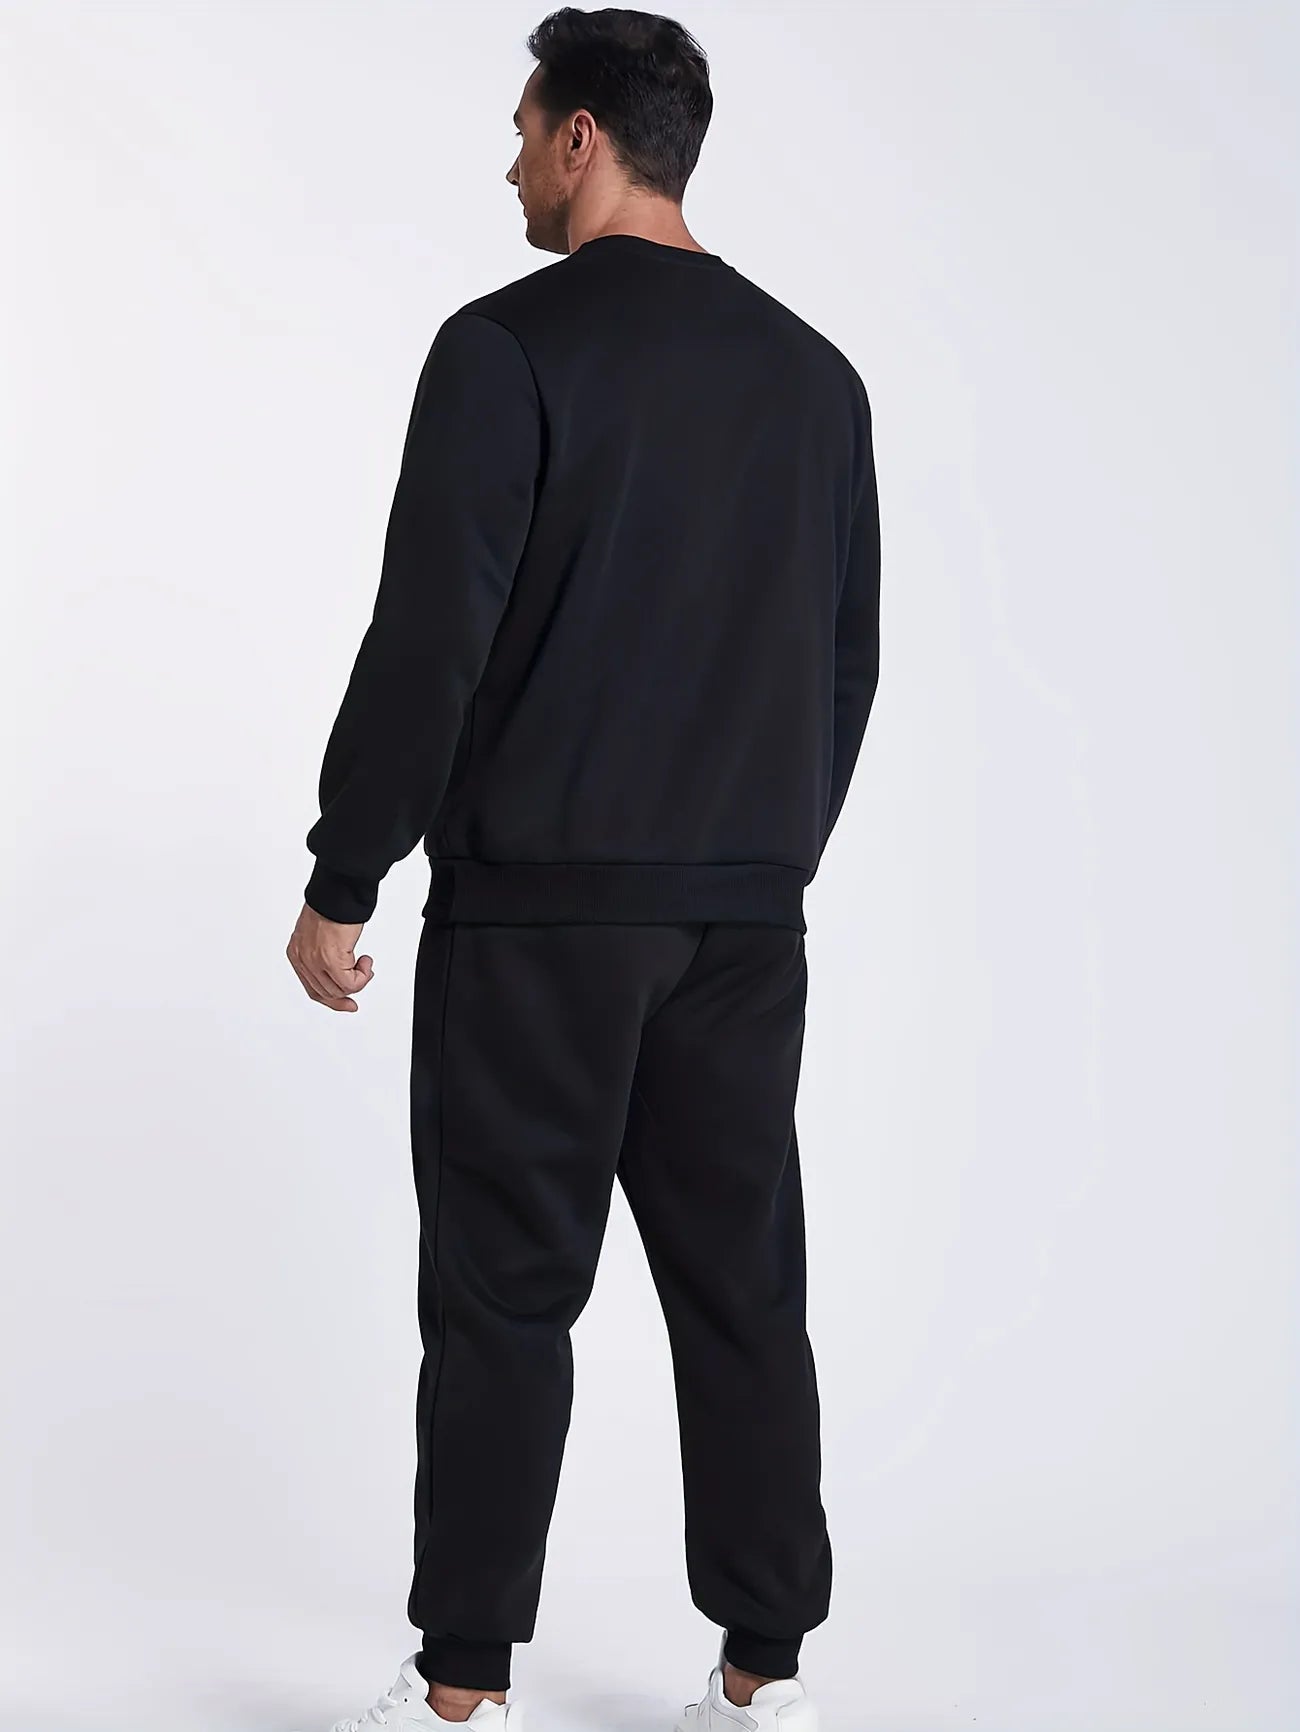 Mens Sweatshirt and Pants Set by Tee Tall - MSPSTT20 - Black Black